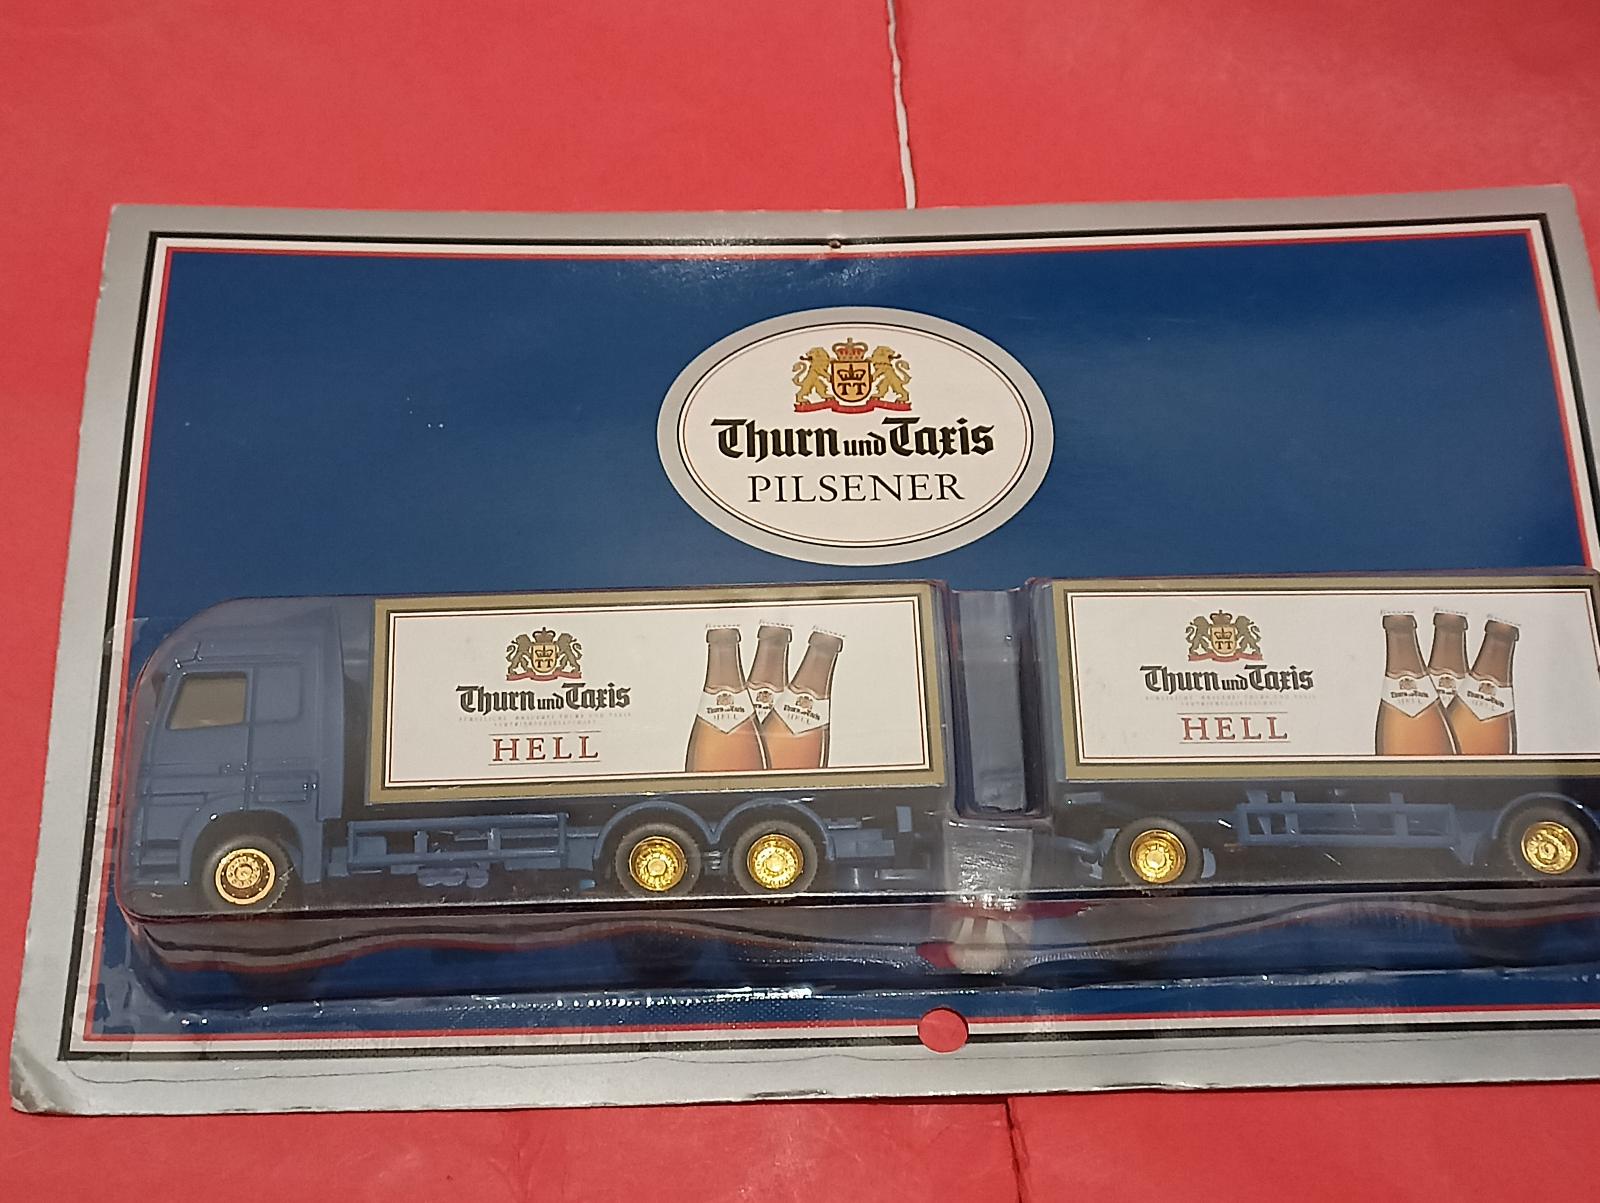 Pivný kamión Thurn und Taris Hell - Pilsener - Nápojový priemysel